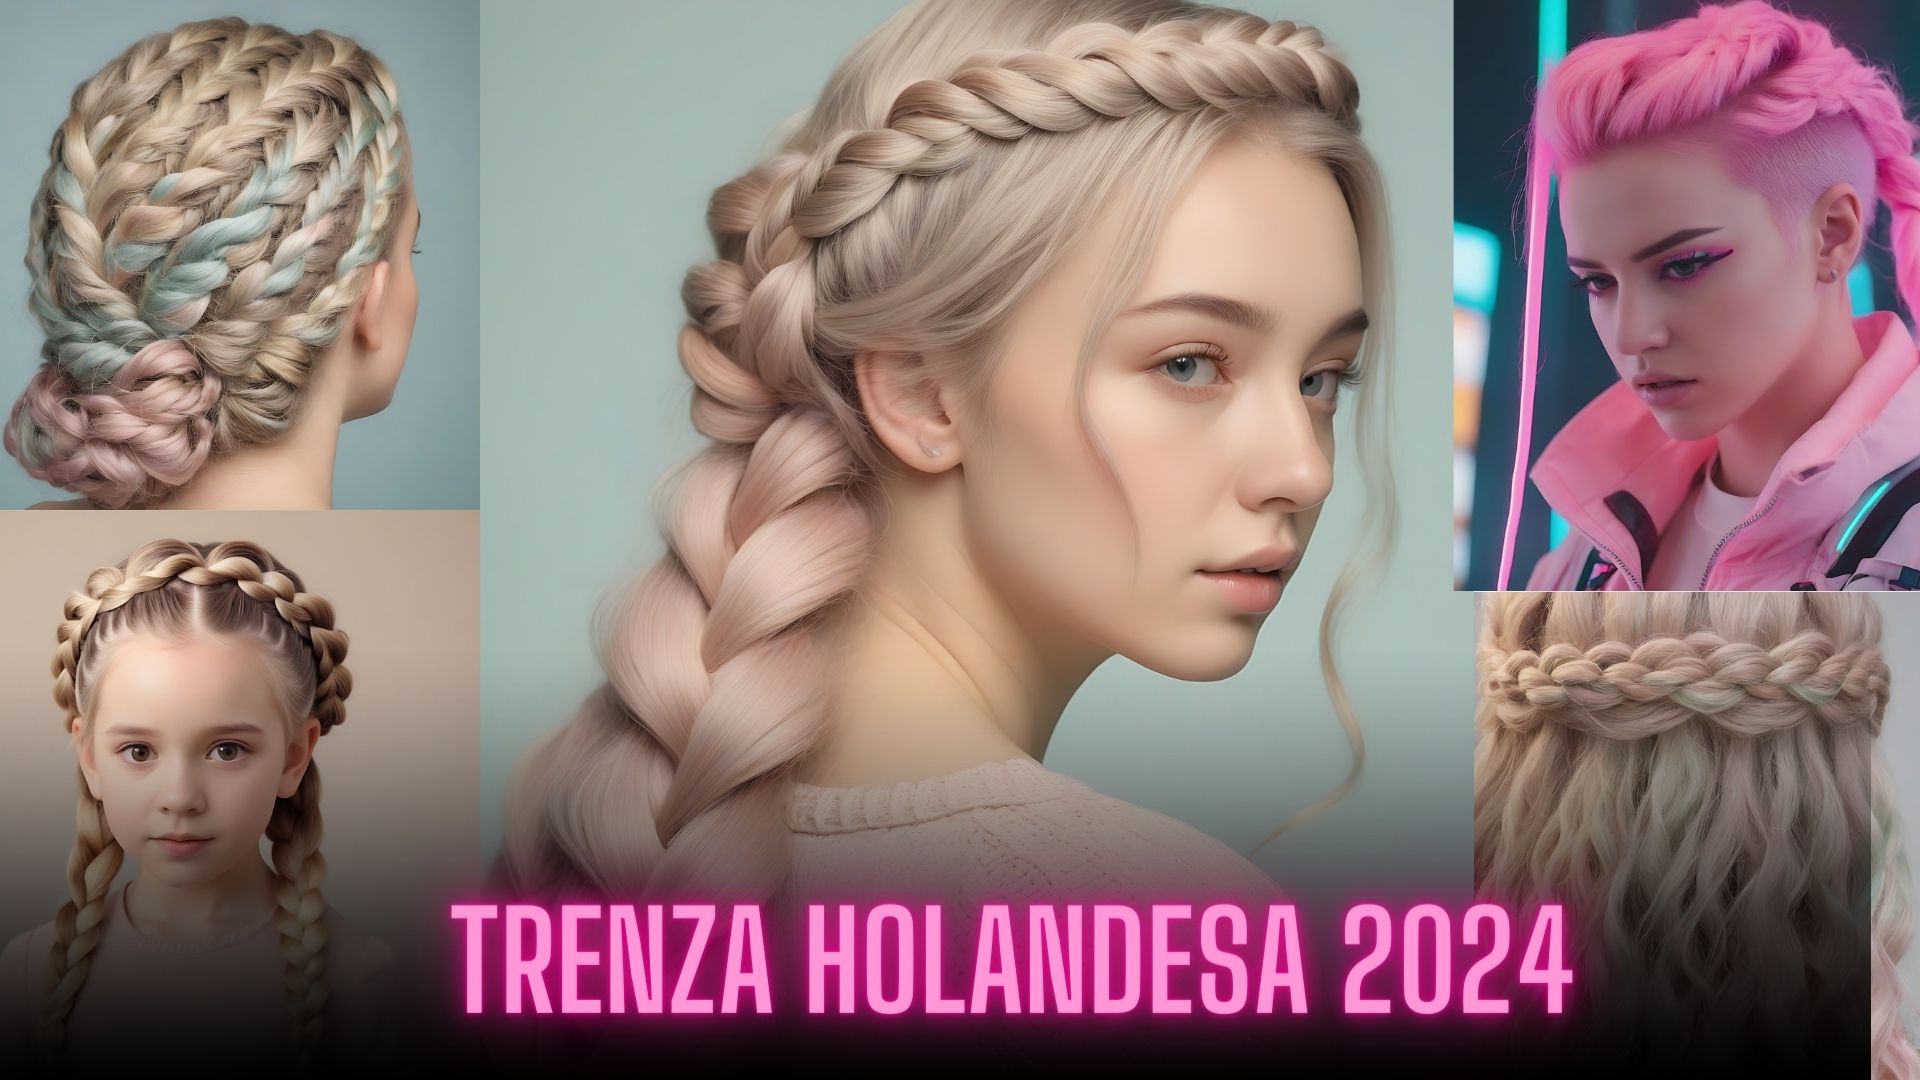 Trenza holandesa 2024